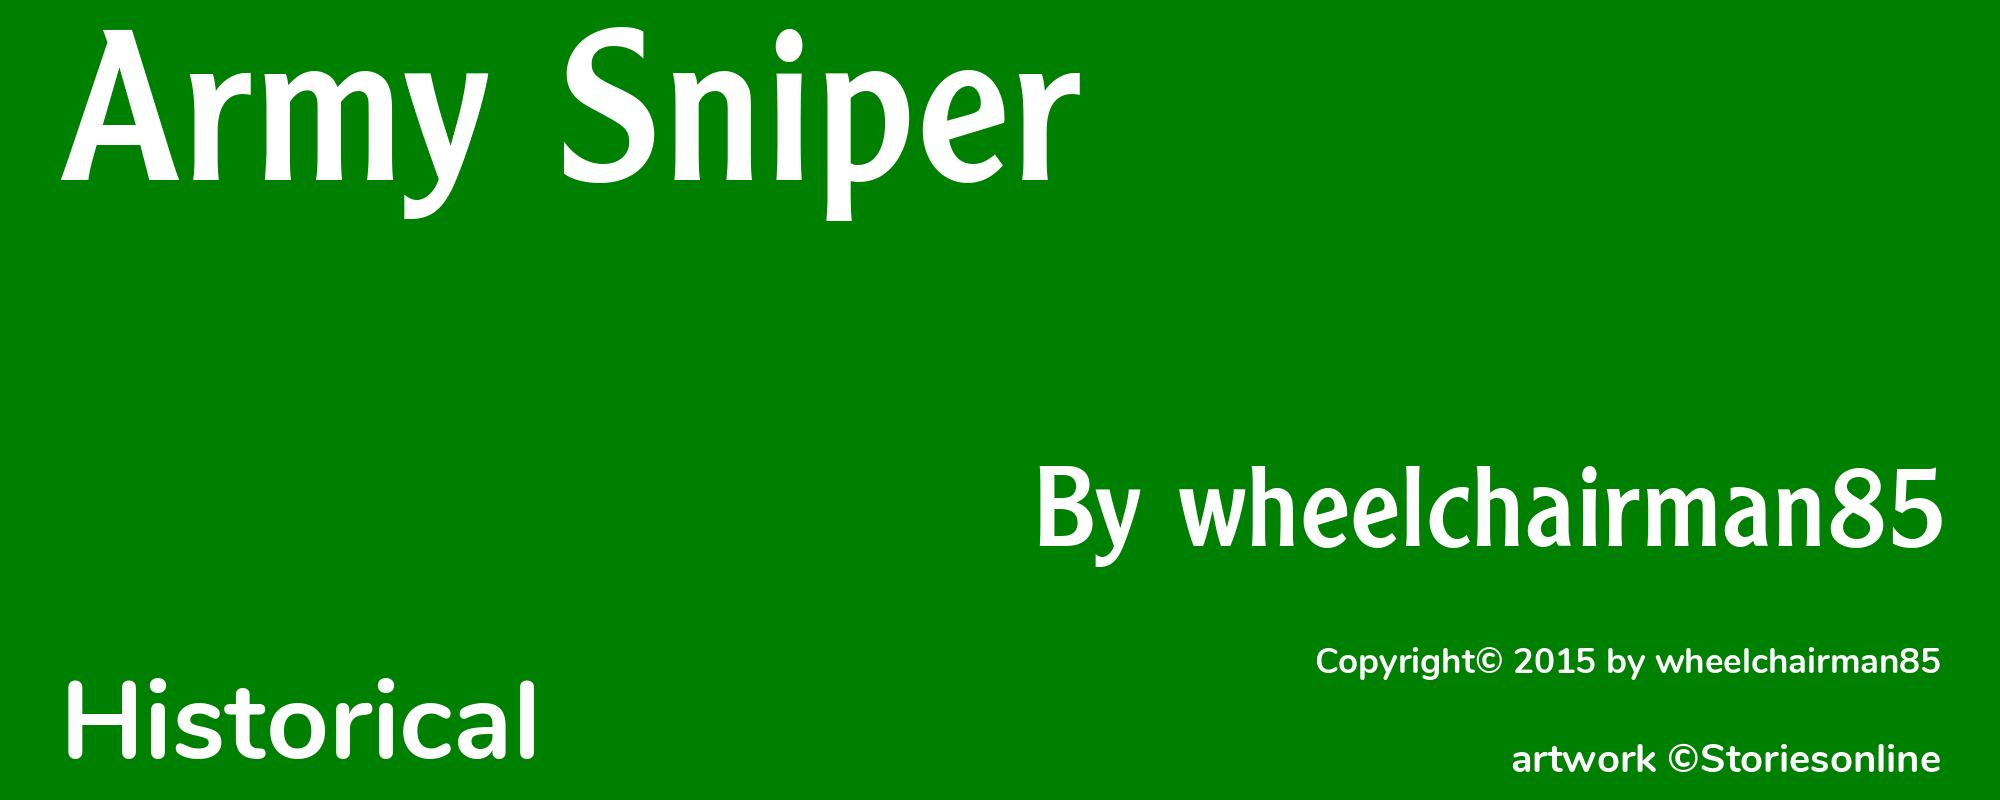 Army Sniper - Cover